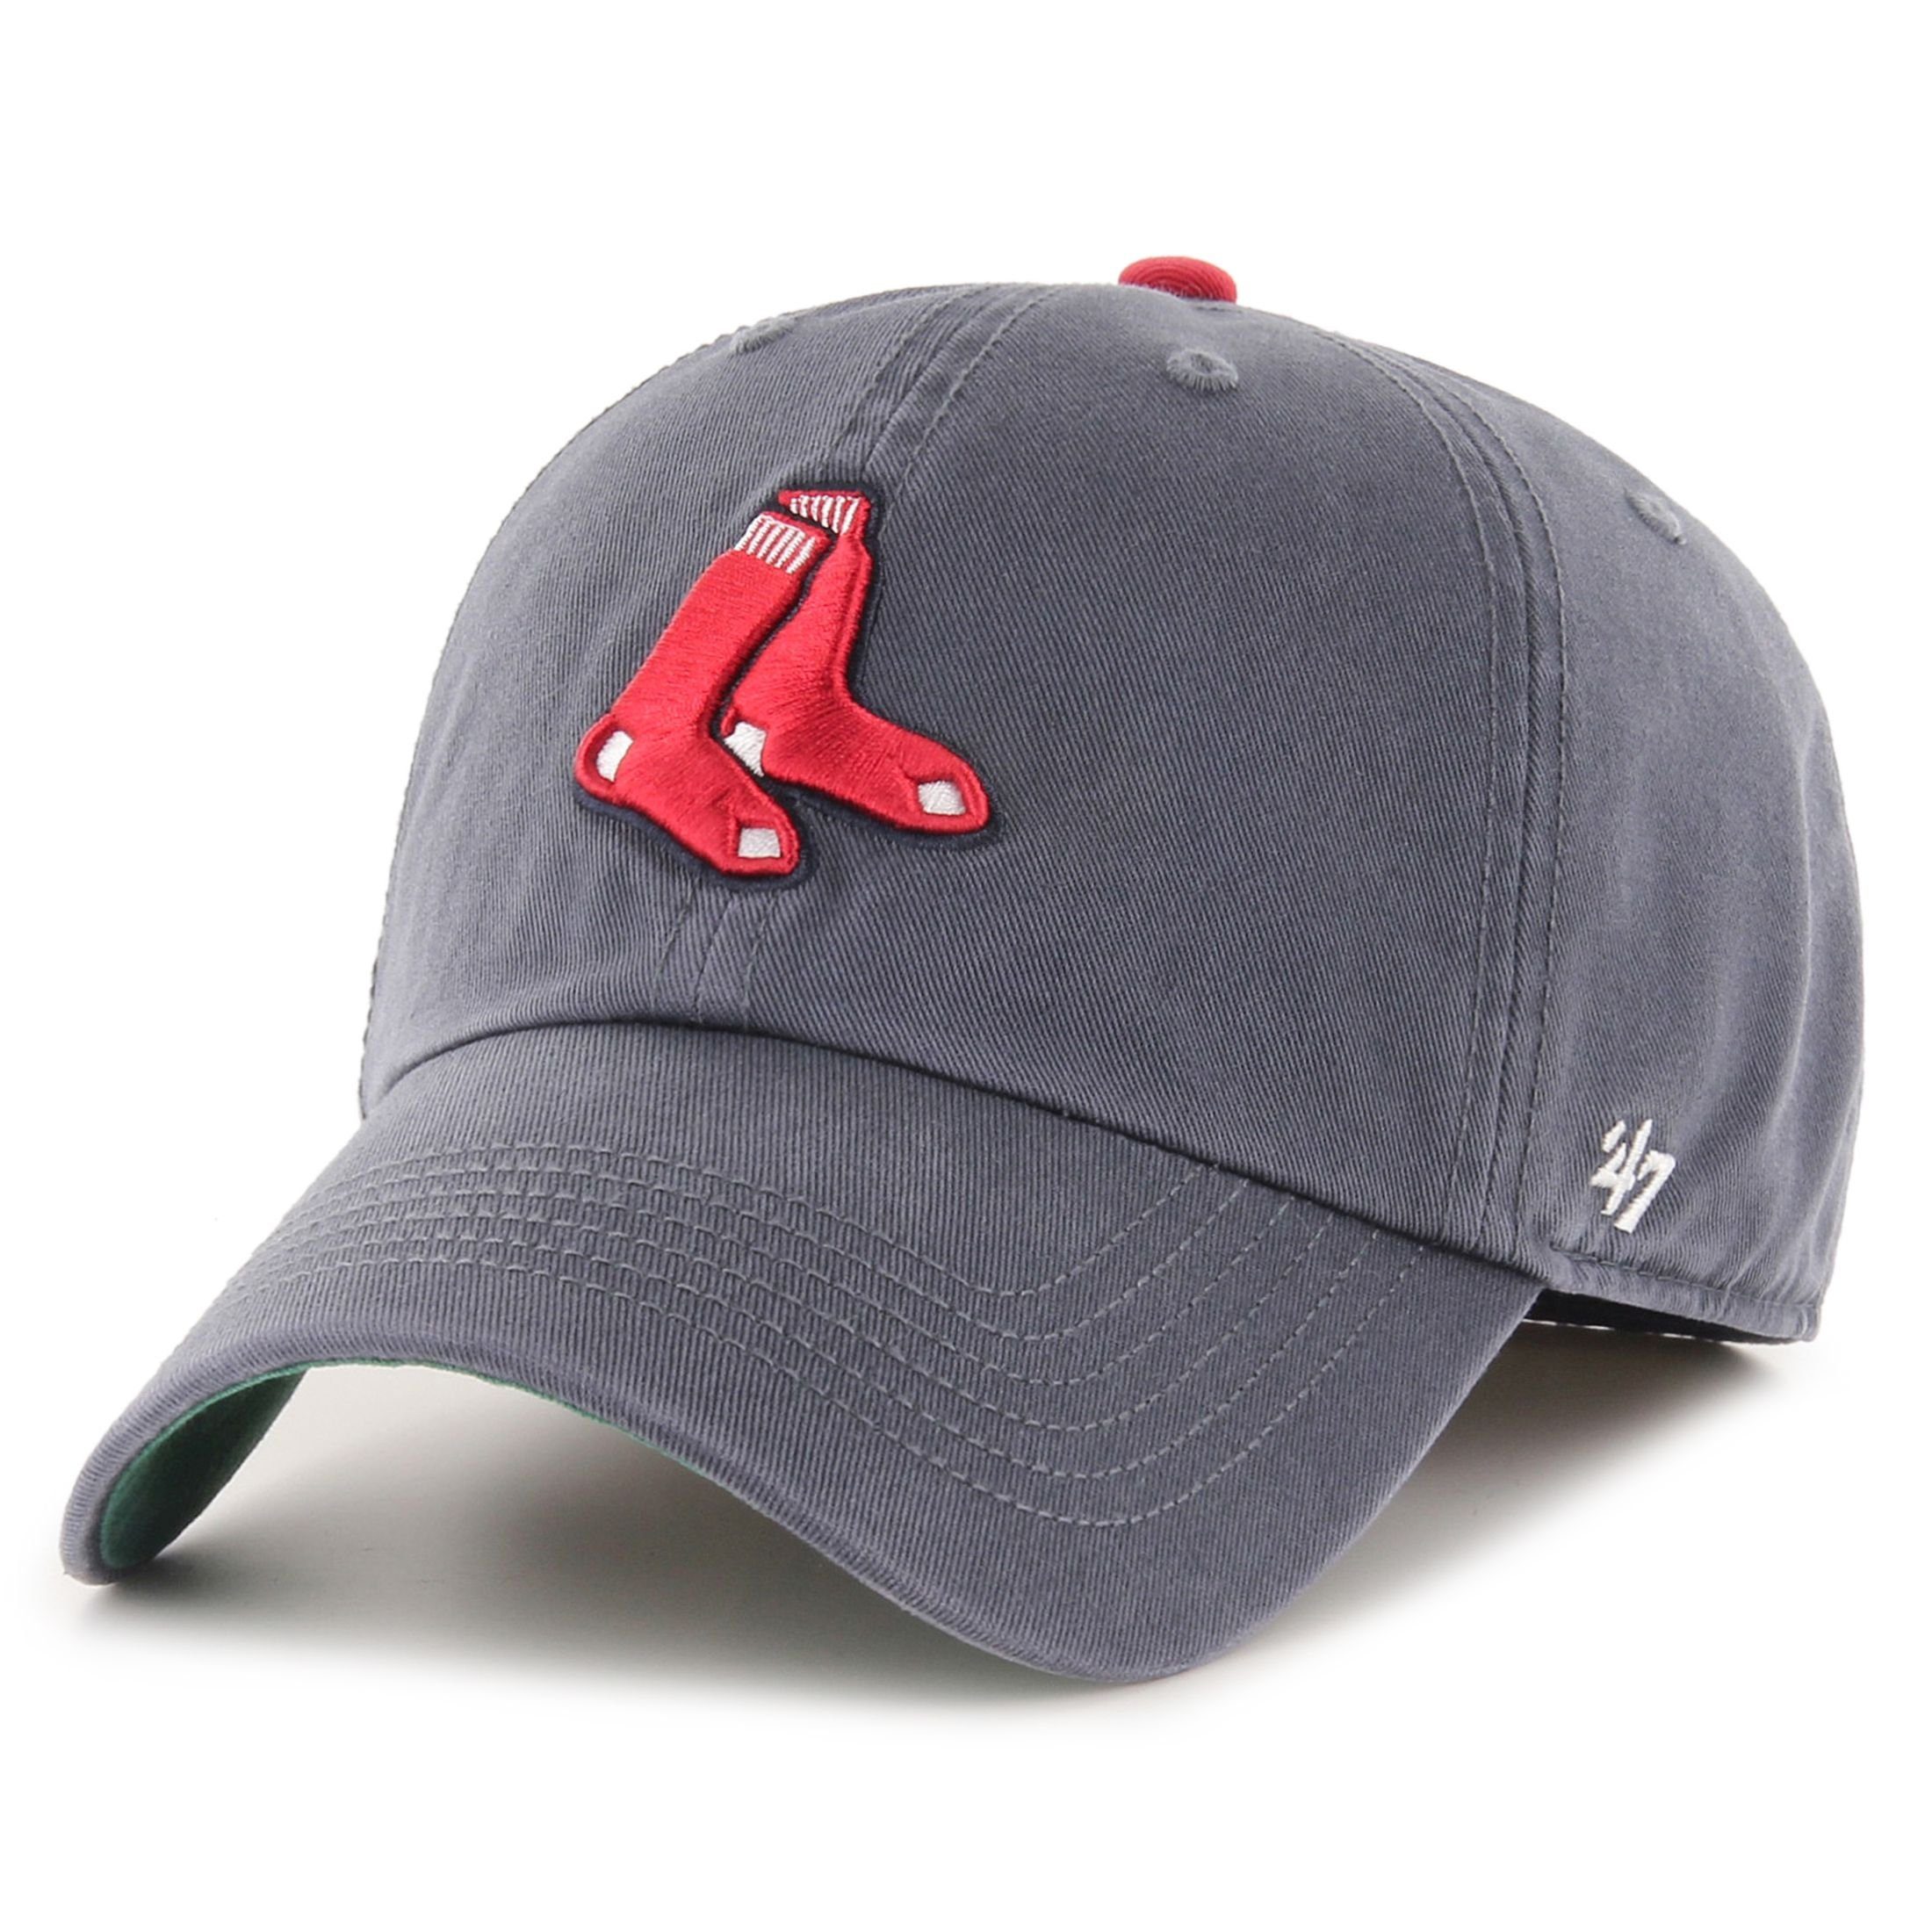 x27;47 Brand Cap Red FRANCHISE Sox Flex Curved Boston